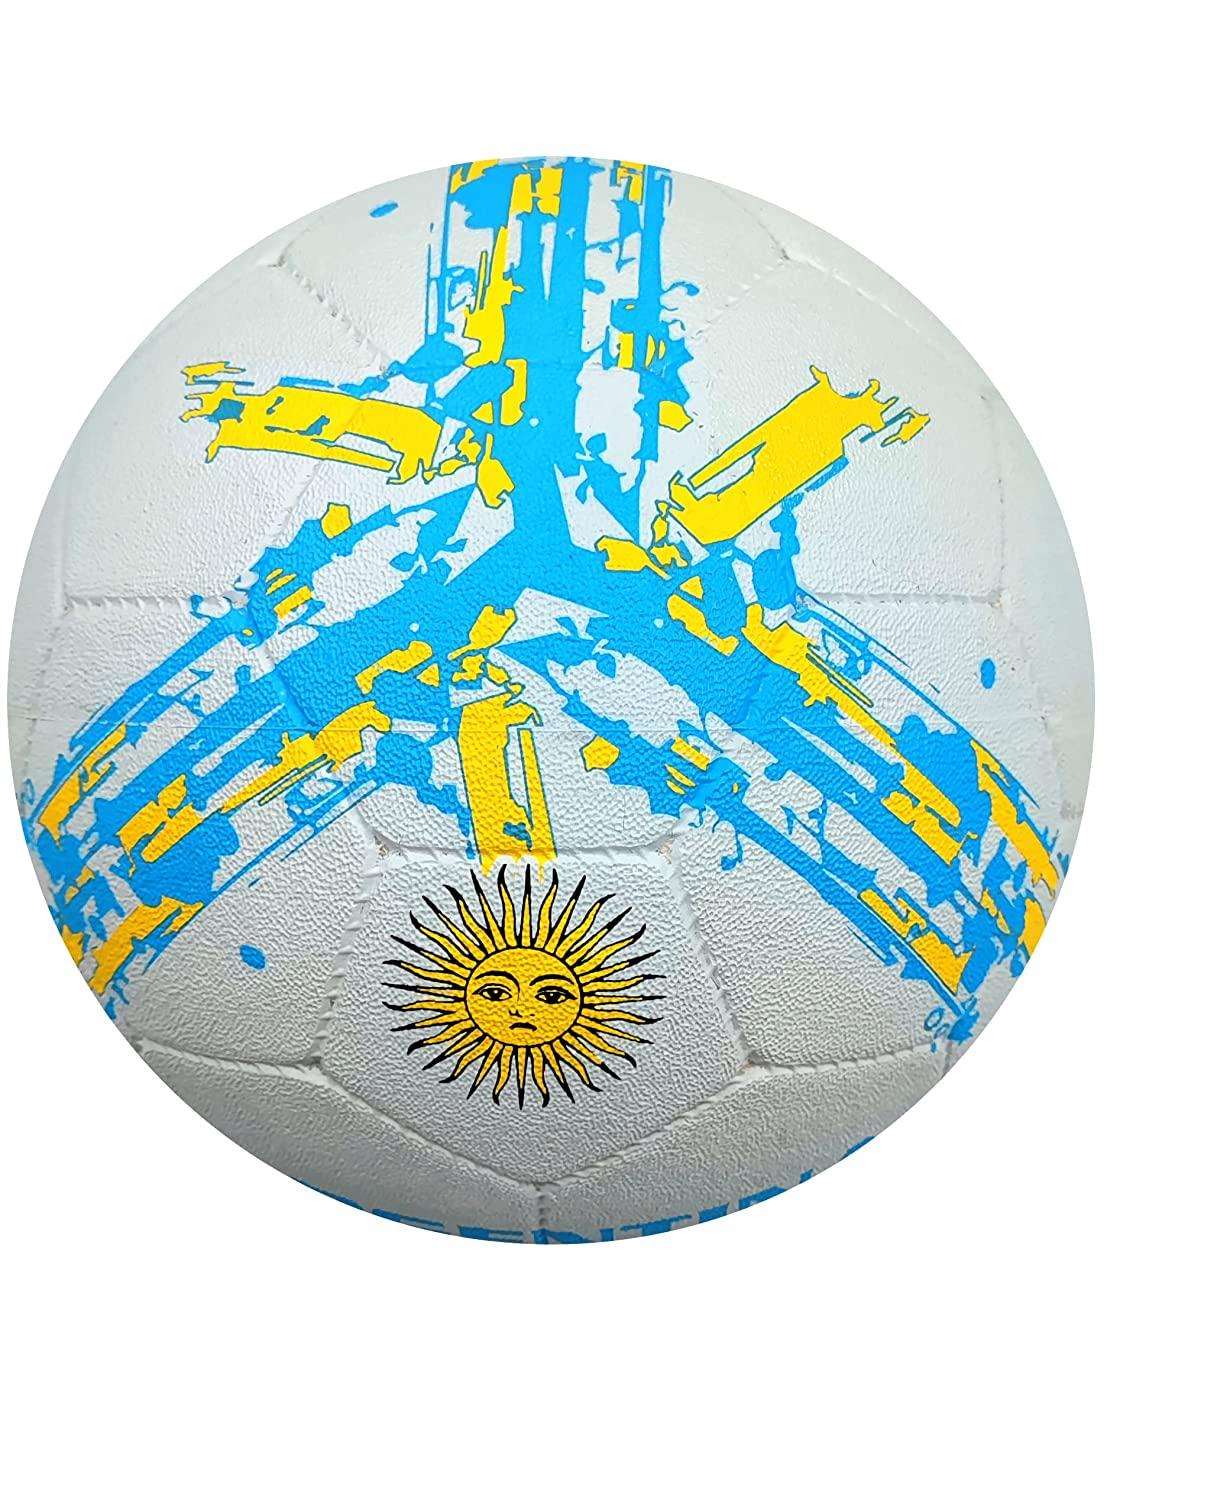 Synco Flag Molded Rubber<br> Football | Size-5 | Soccer Ball| <br>Street Football<br> (Argentina-White) - 3